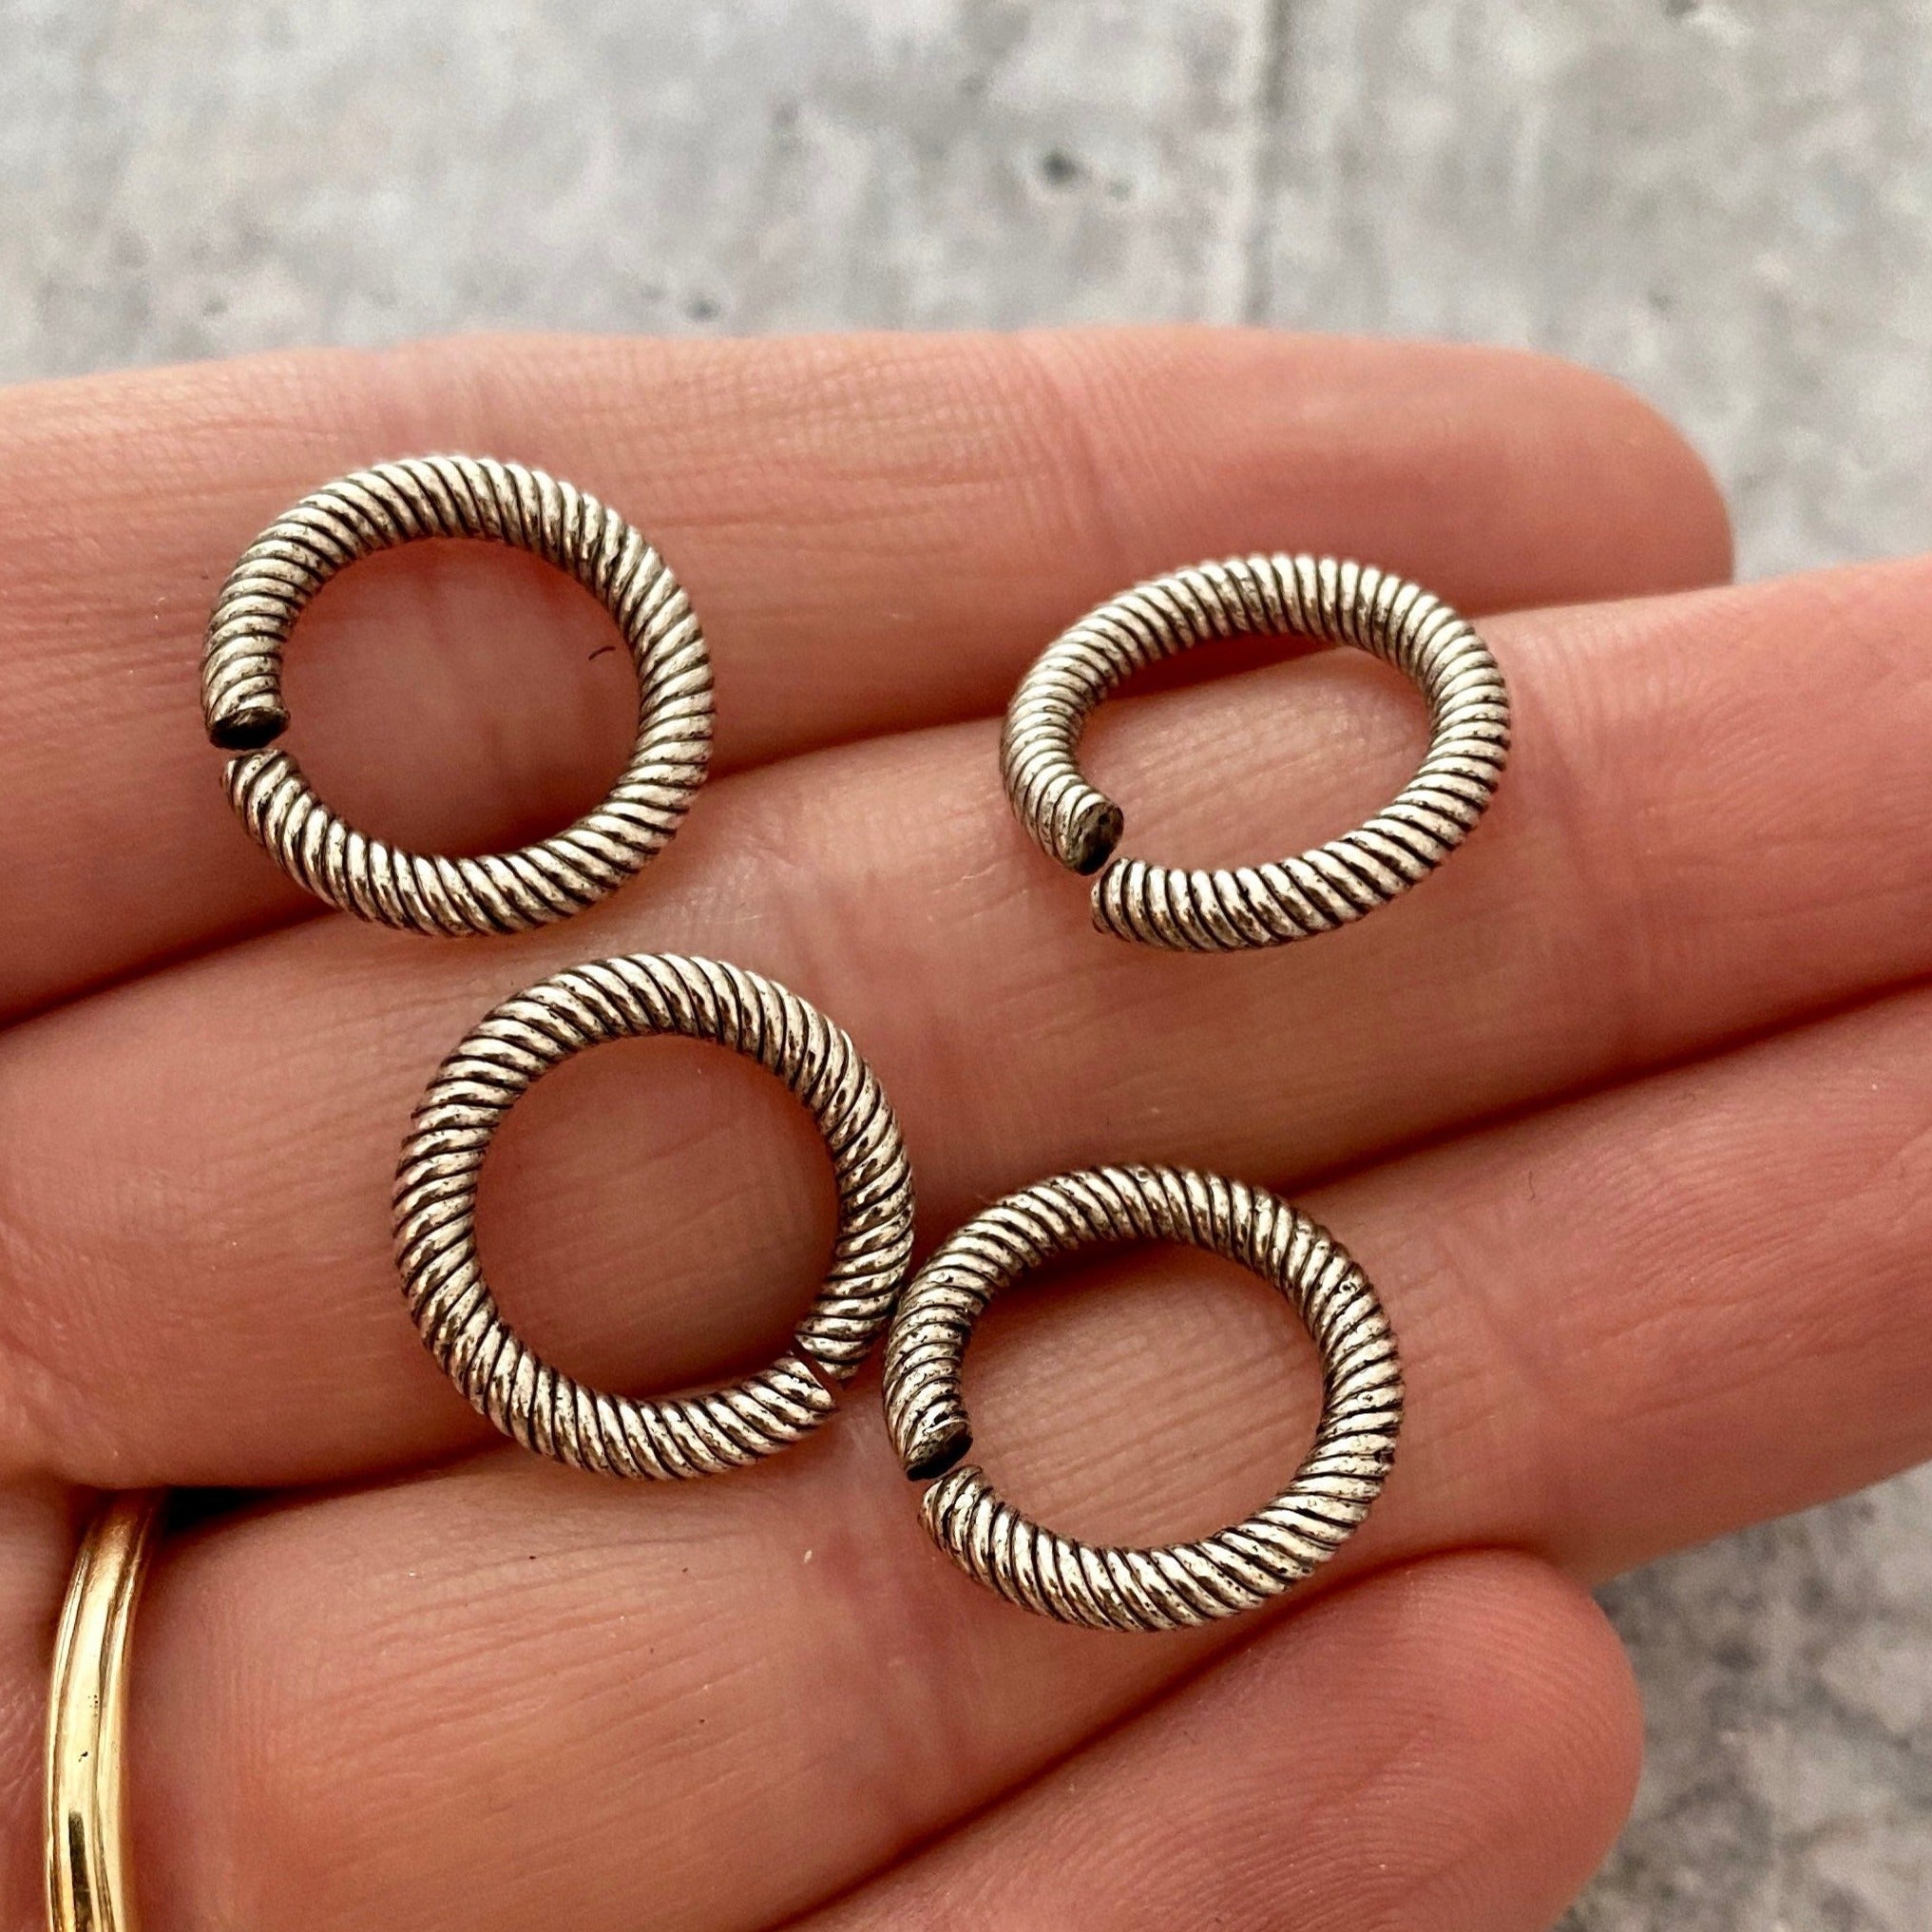 42+ Amazing Wire Ring Tutorials | AllFreeJewelryMaking.com